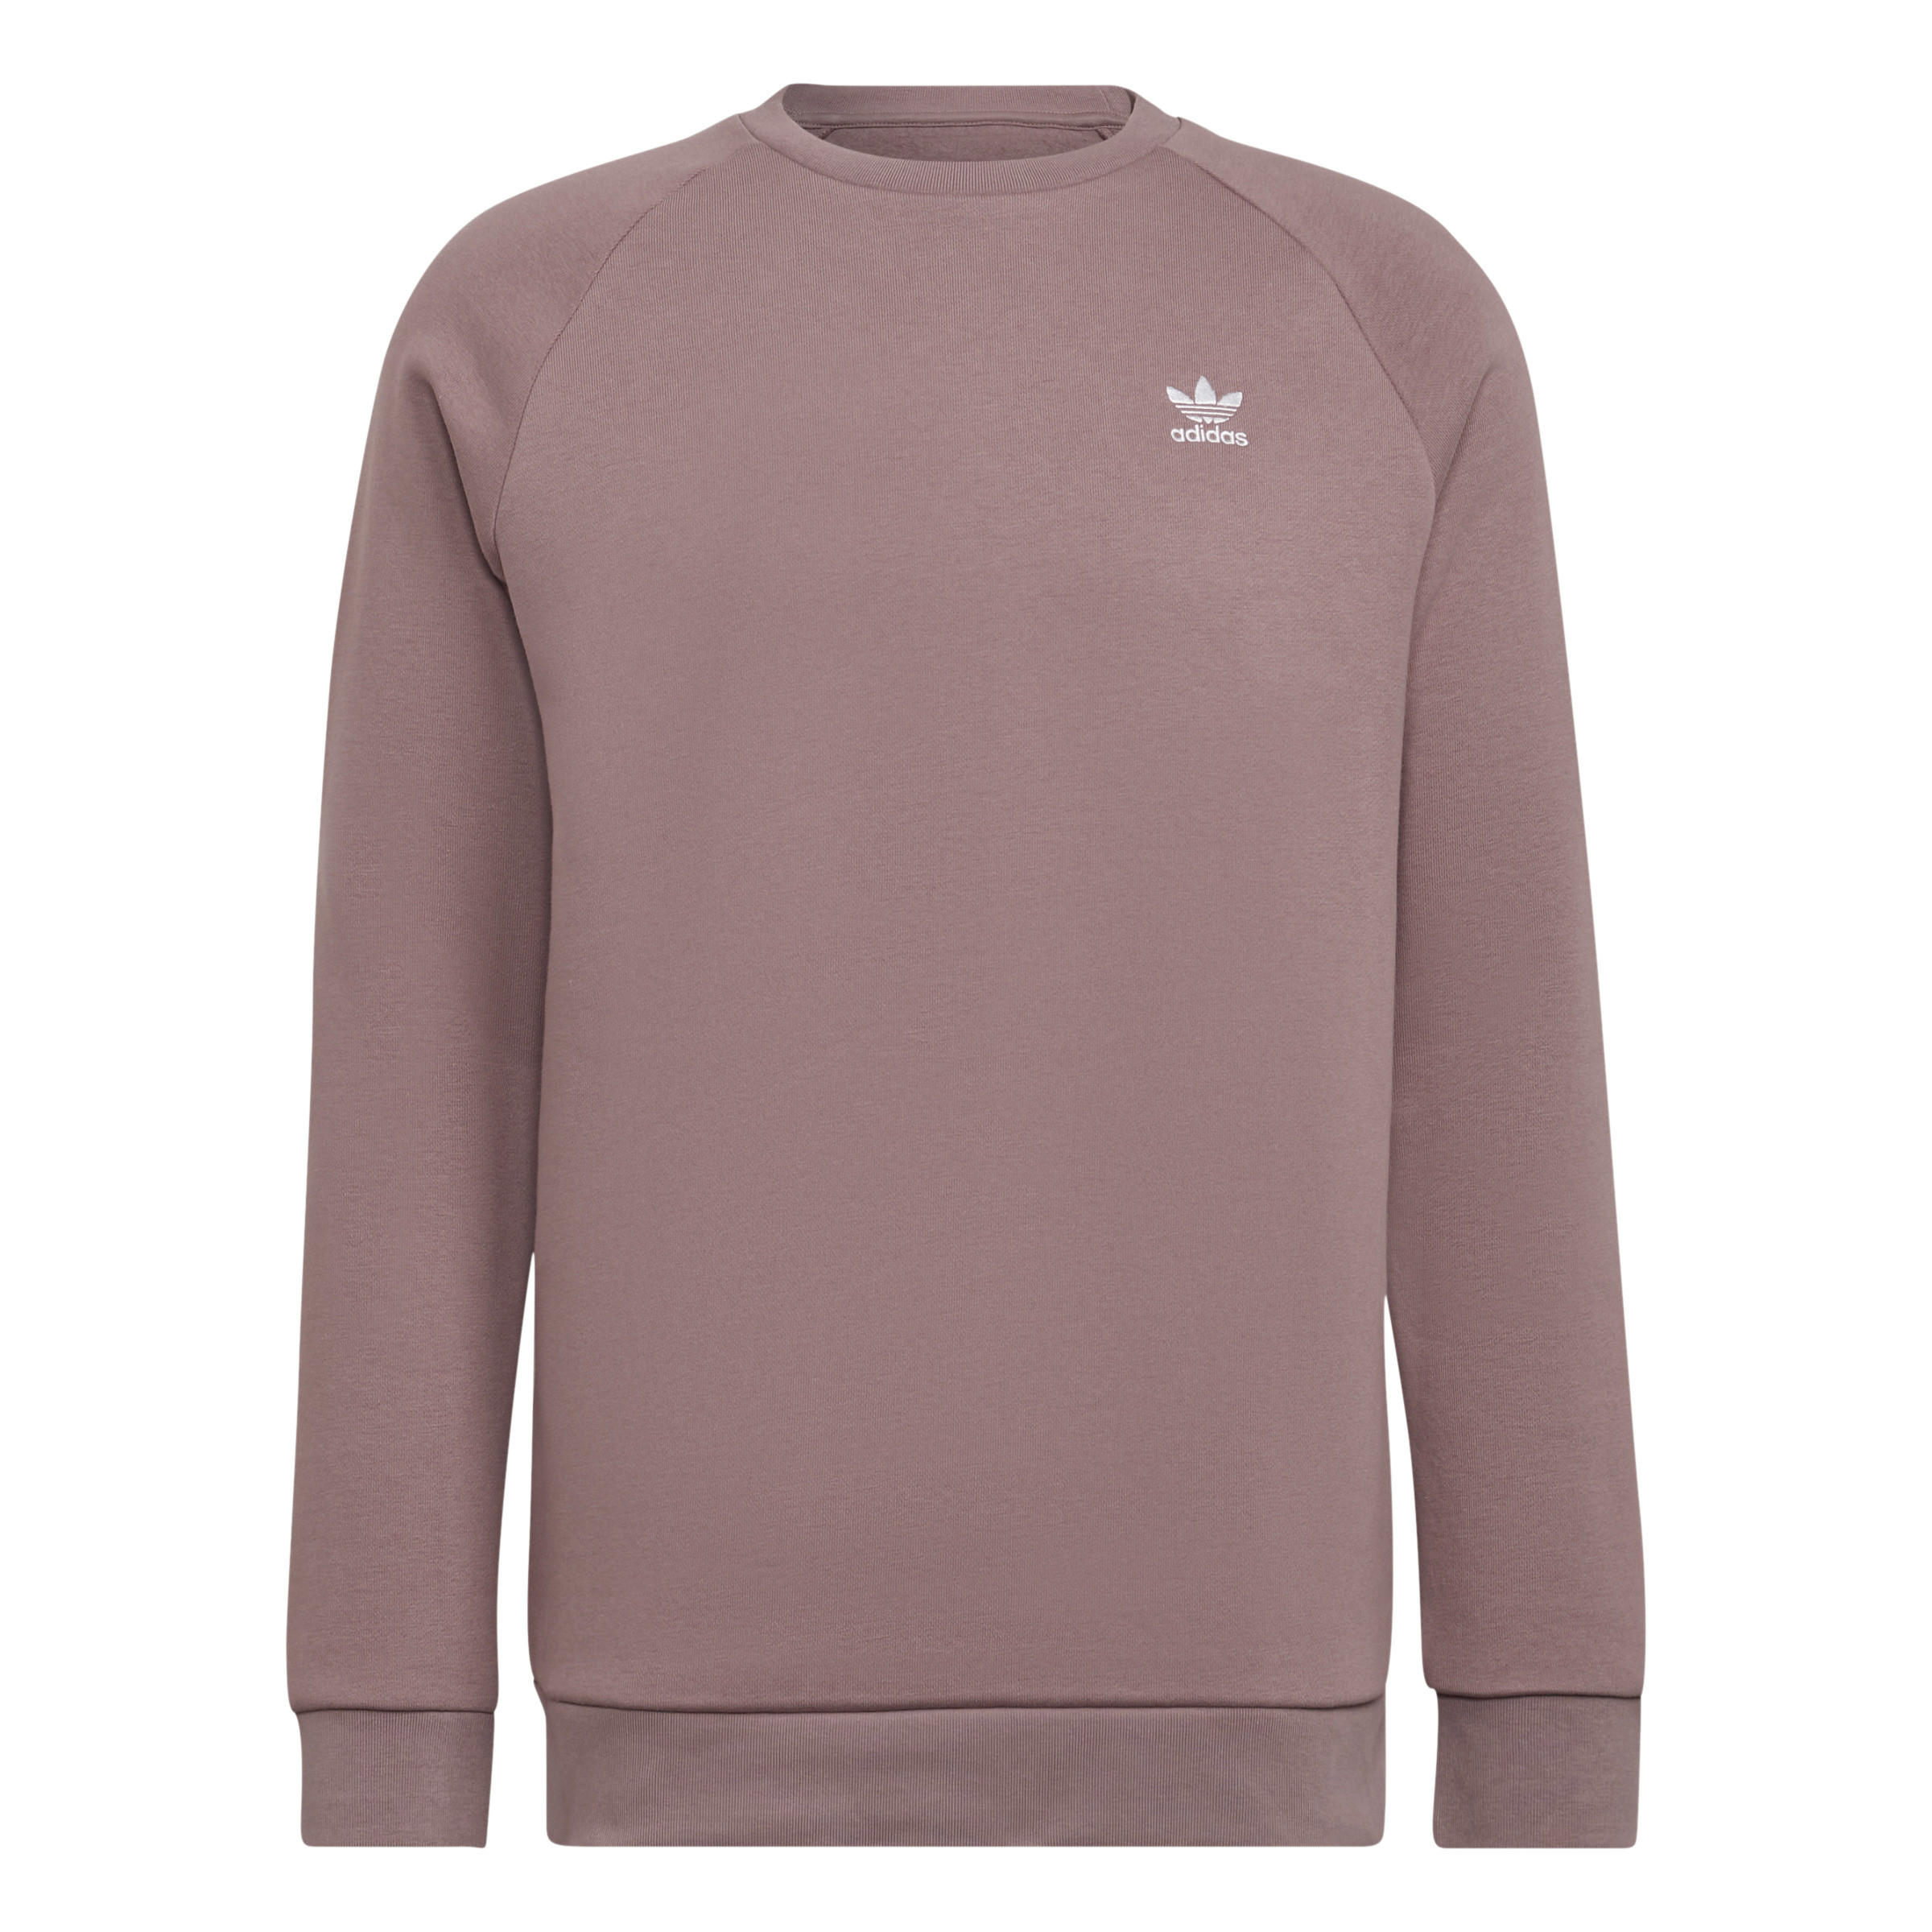 Adidas - Adicolor essentials trefoil crewneck sweatshirt, Antique Pink, large image number 0